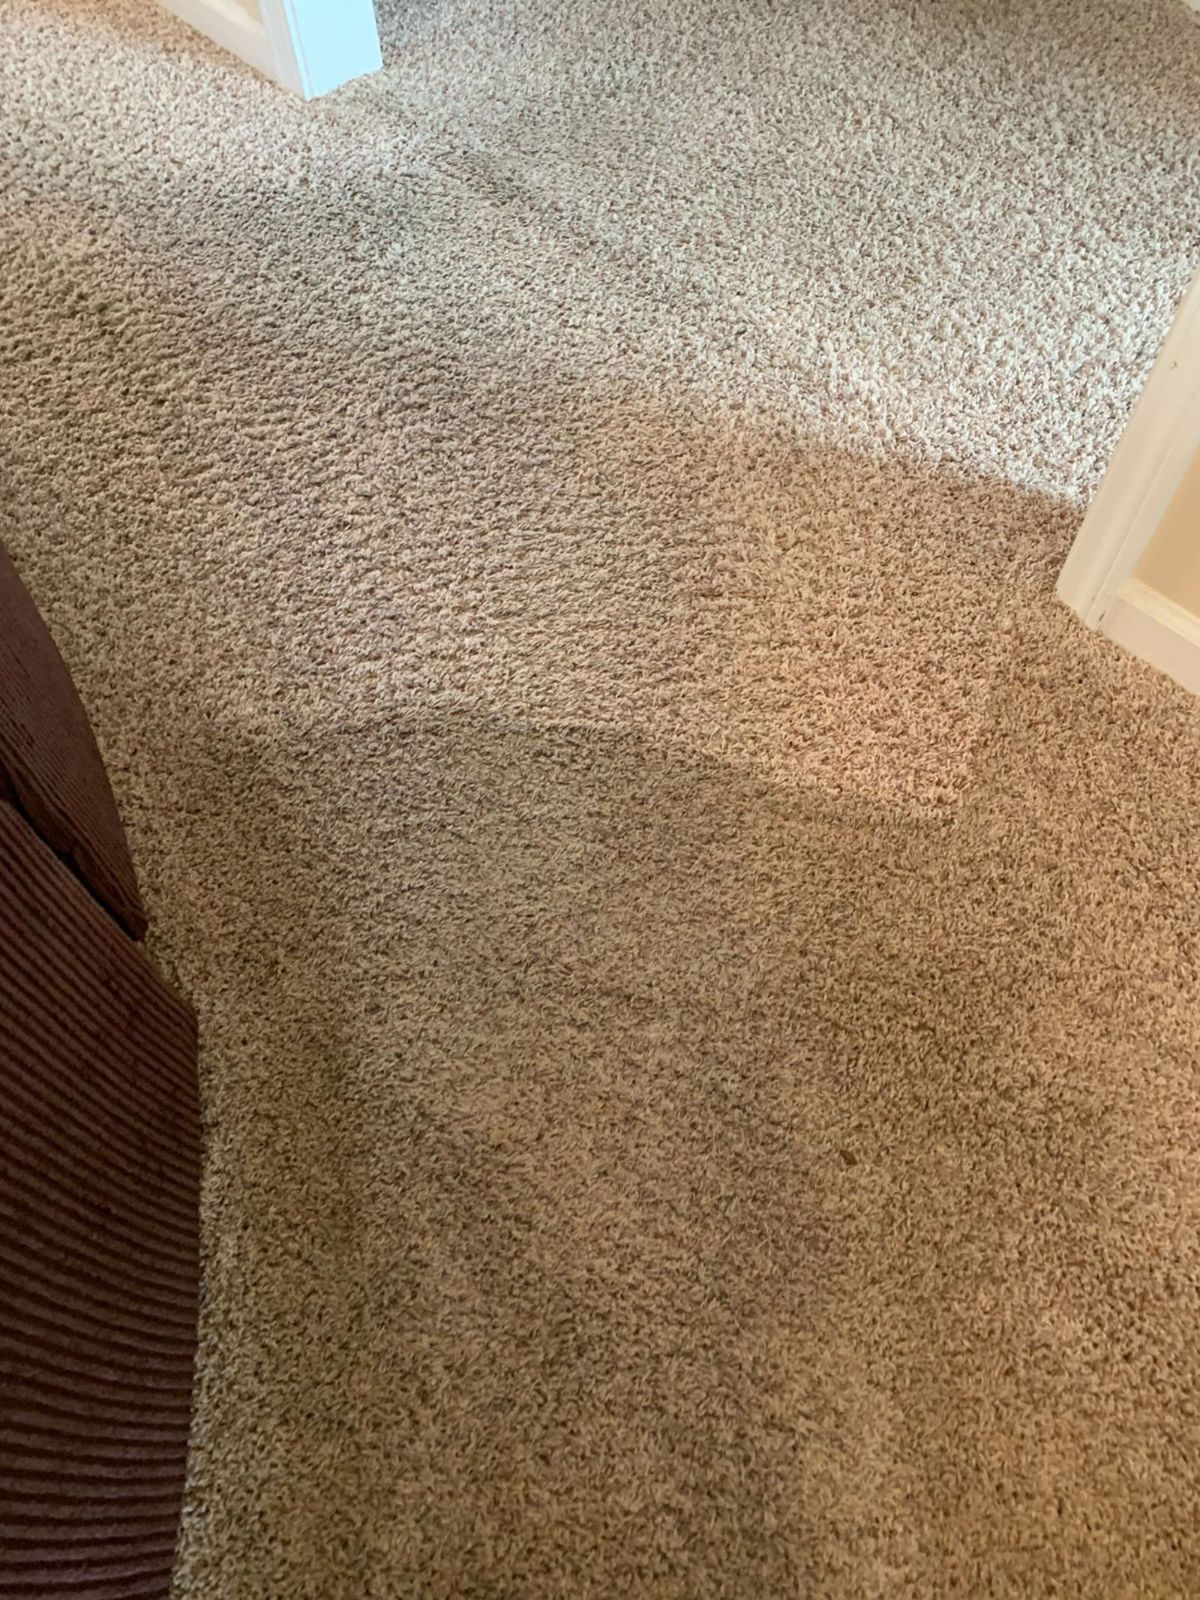 carpet stains